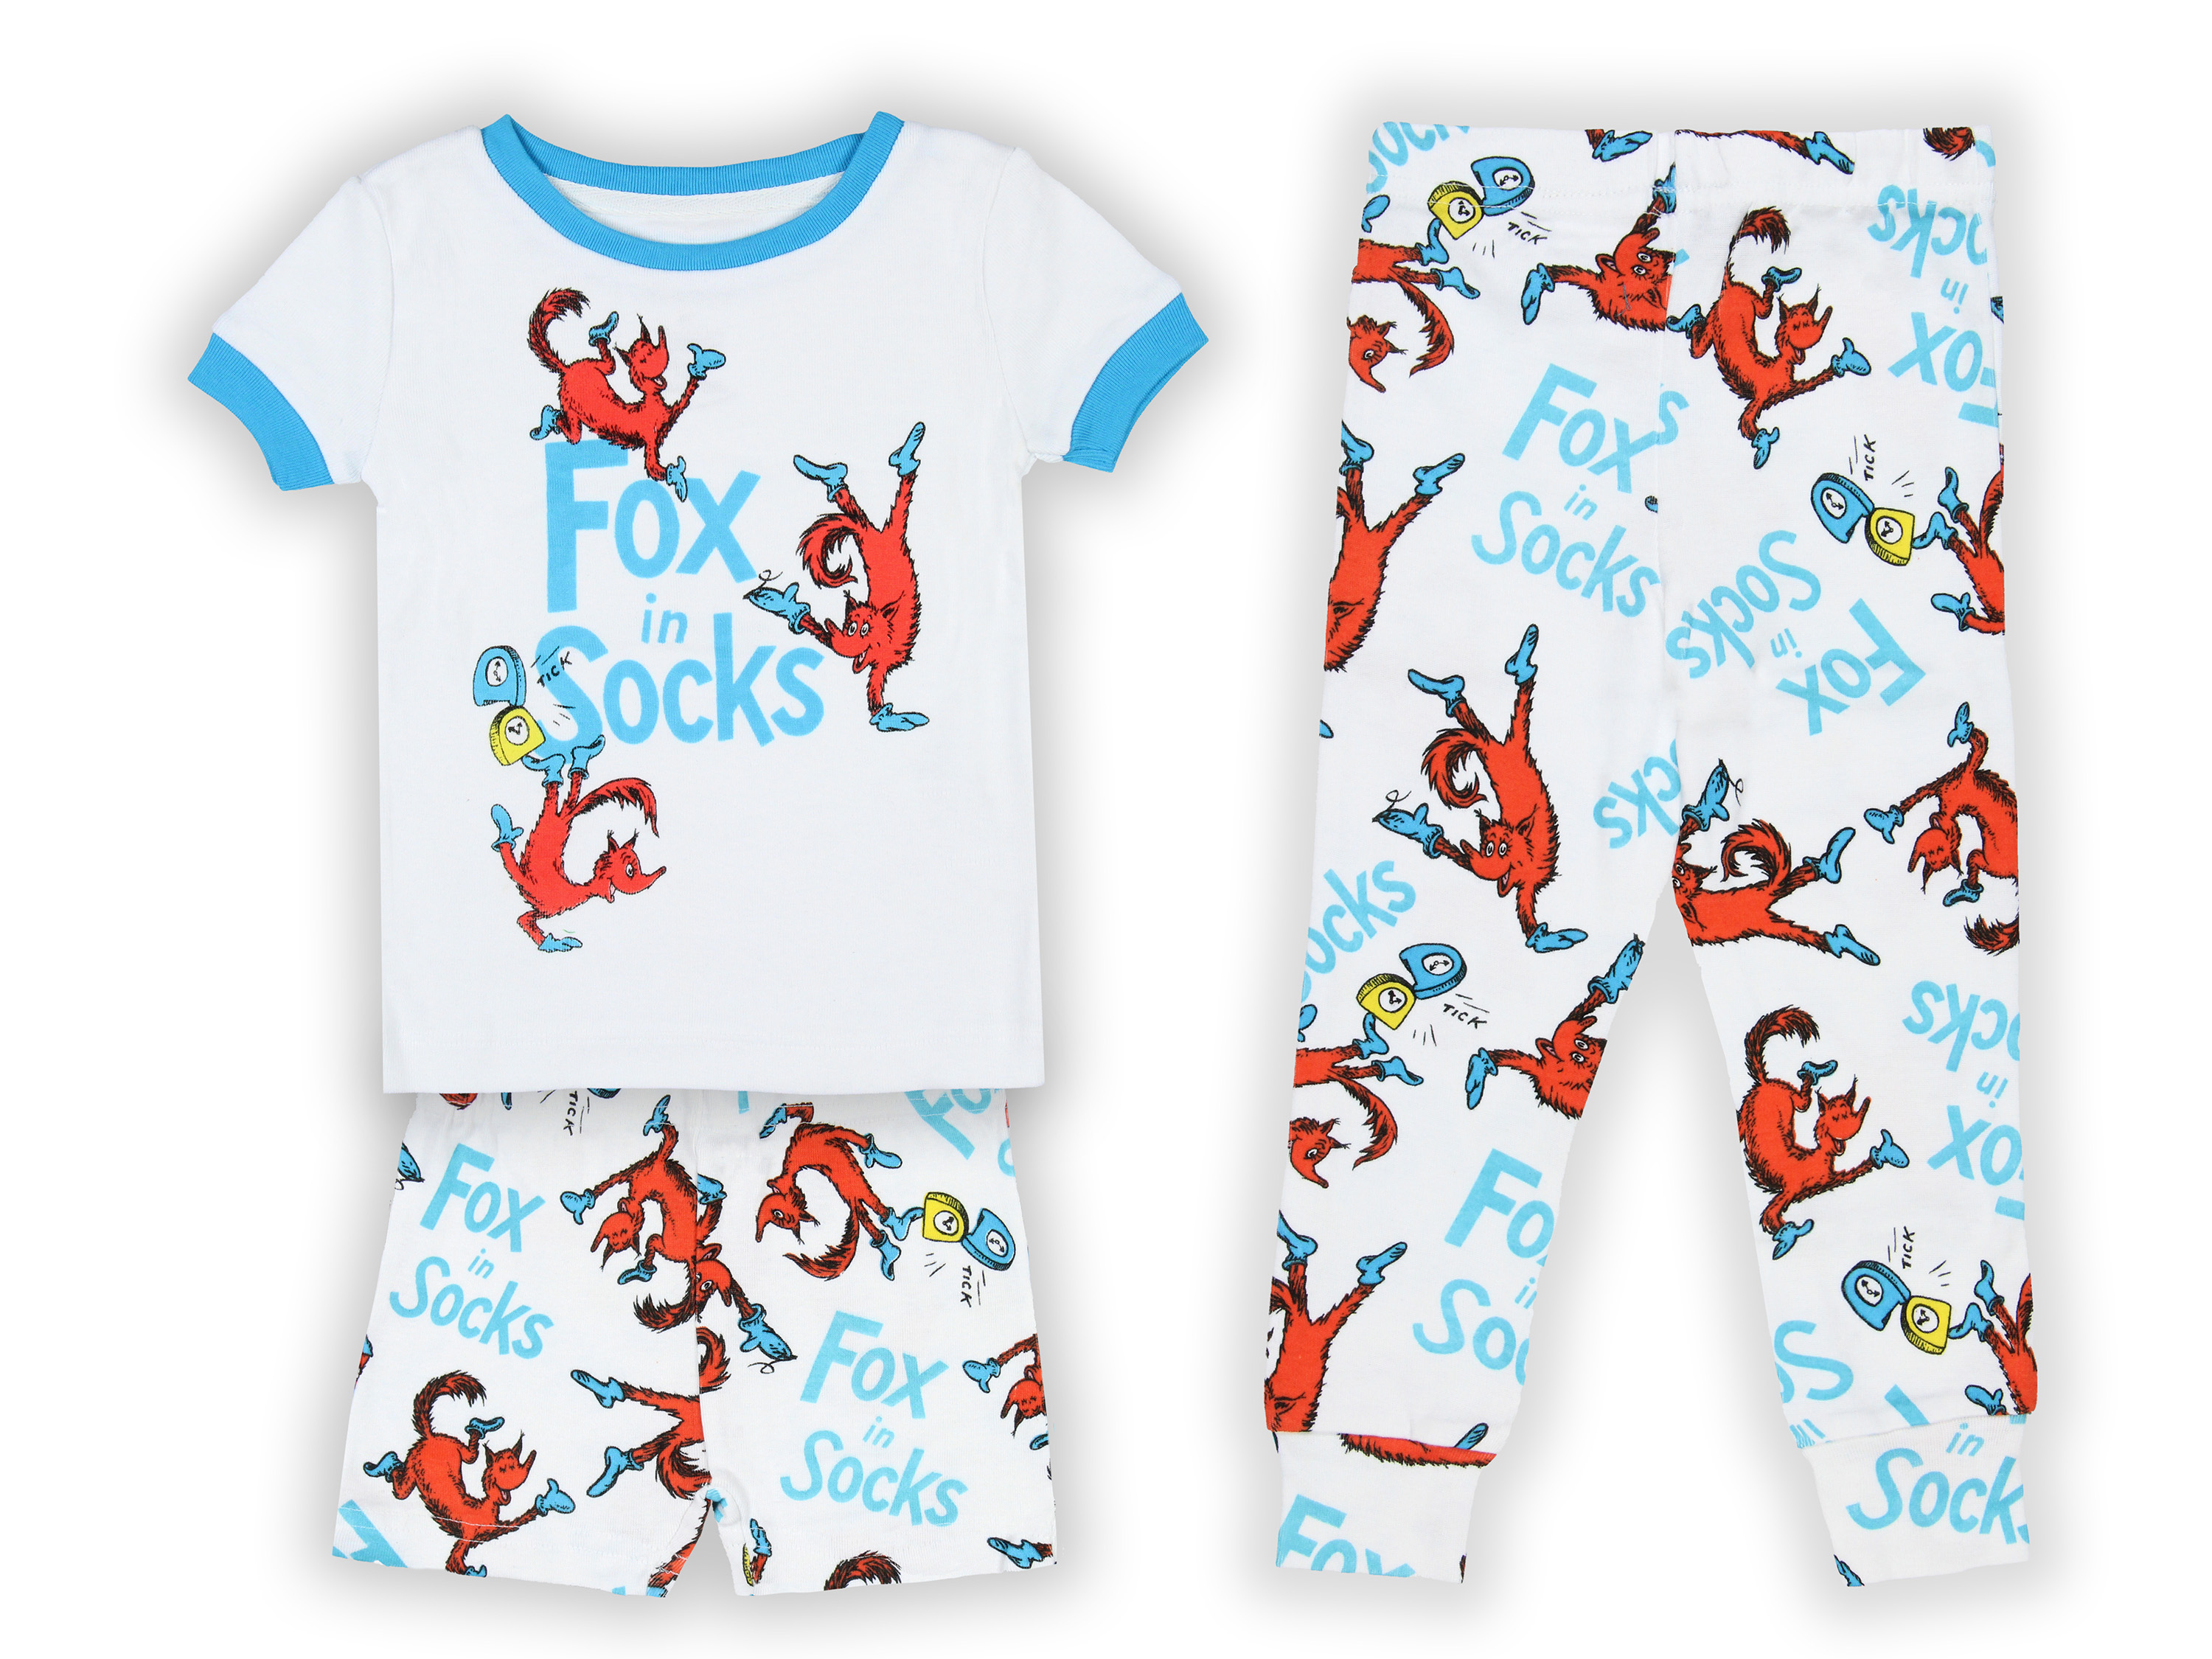 Seven Times Six Dr. Seuss Books Toddler Kids 3 Piece Pajama Set For Boys or Girls Loungewear